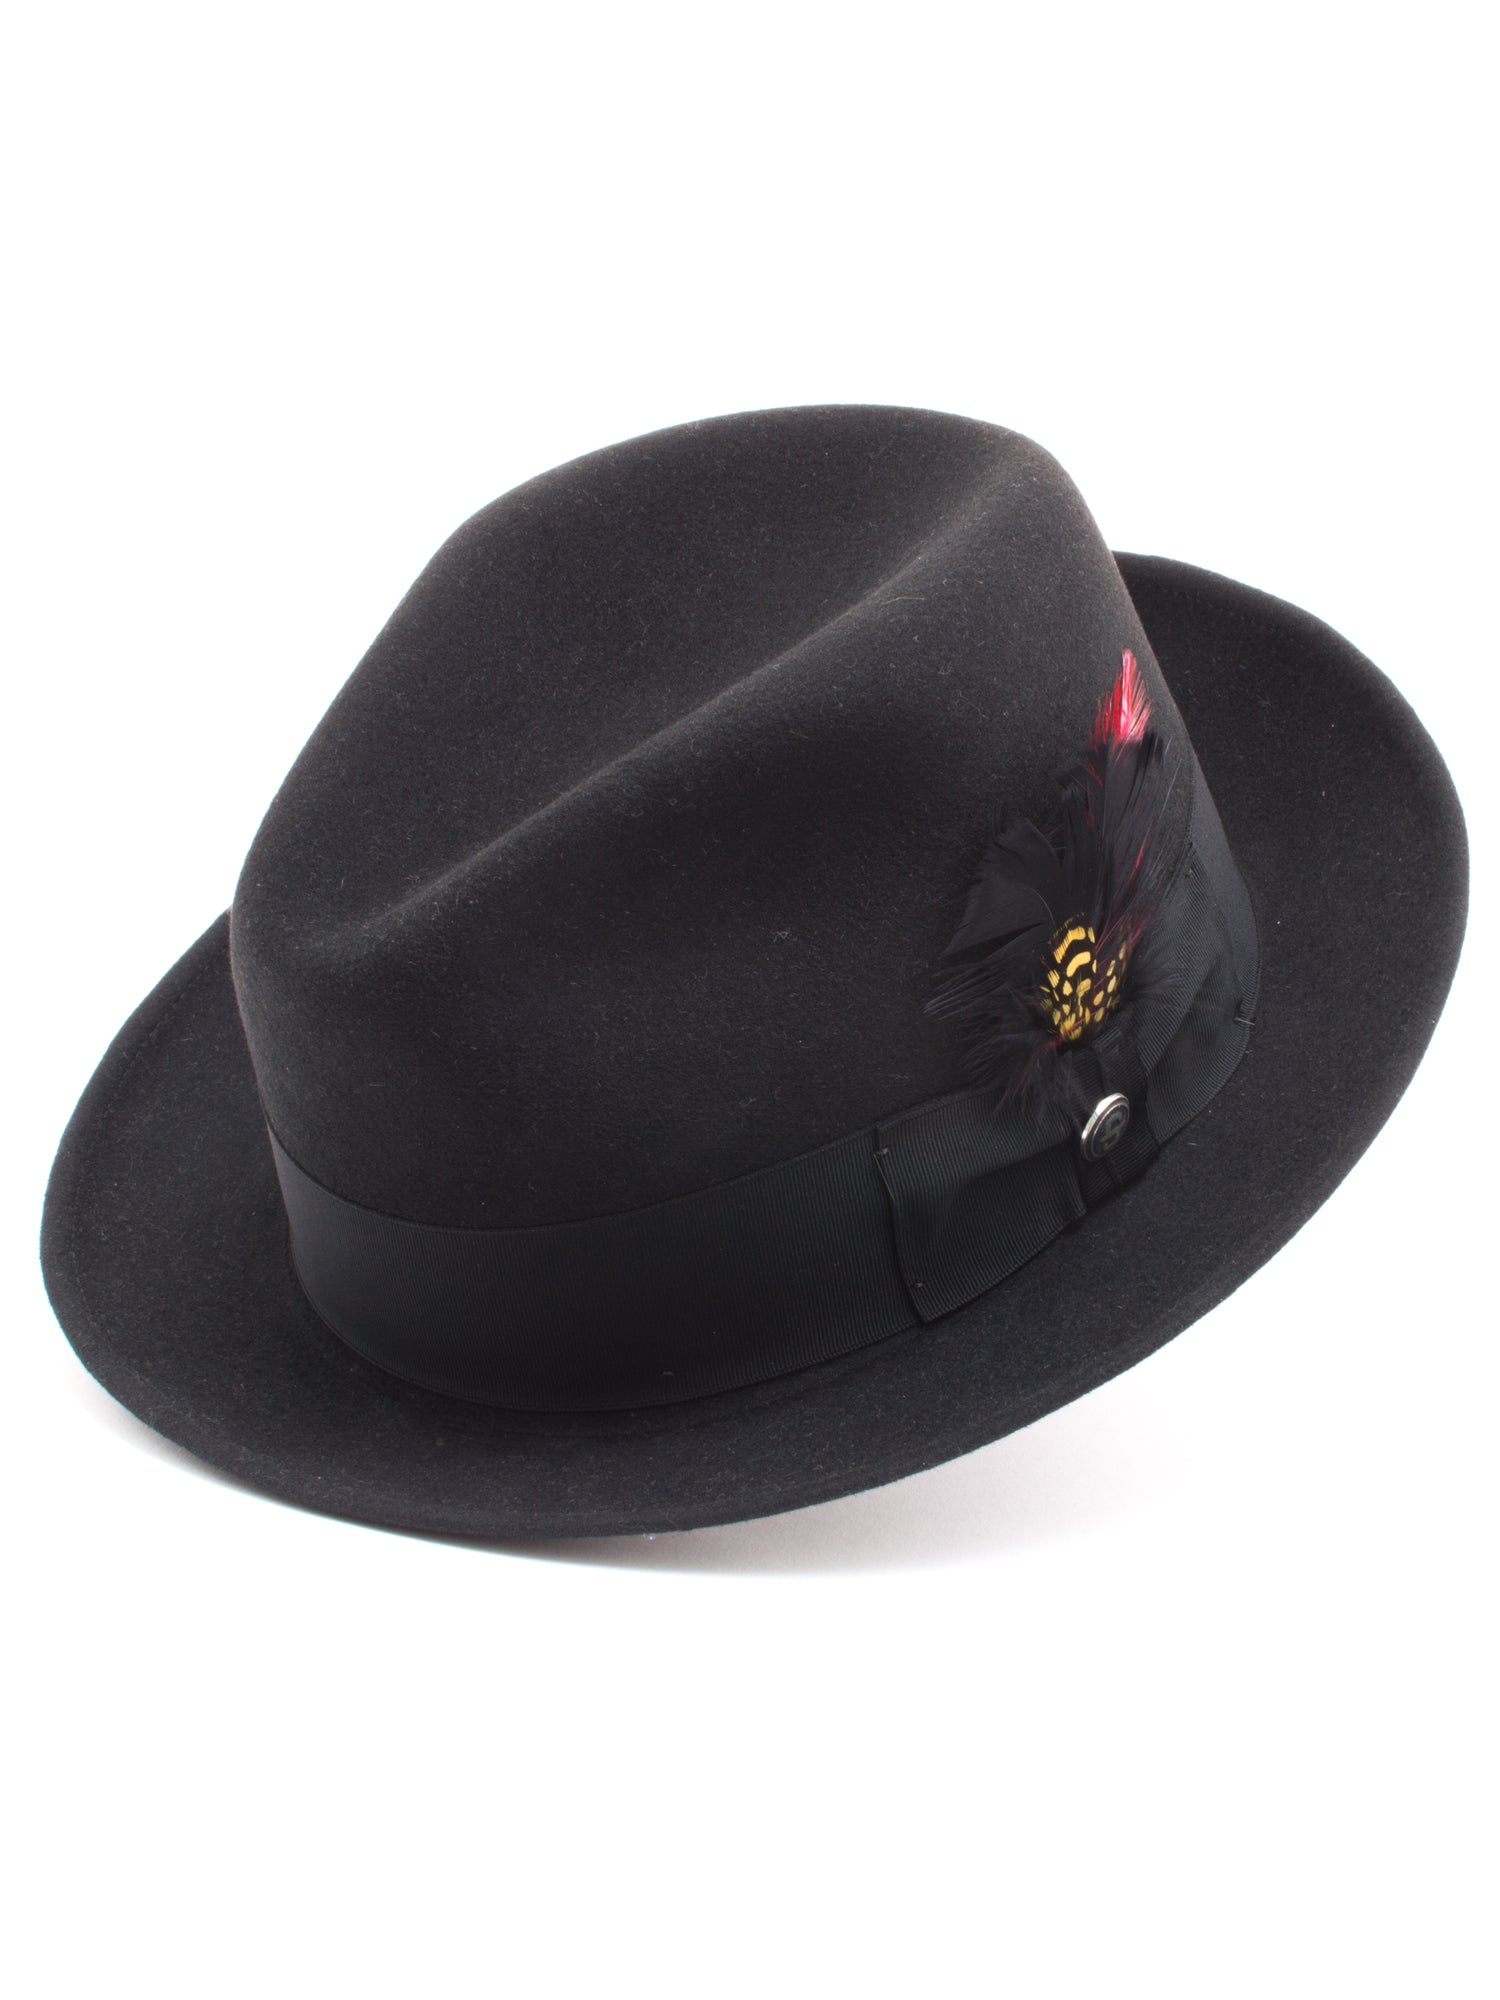 Stetson 100% Pure Wool Felt Frederick Hats in Black